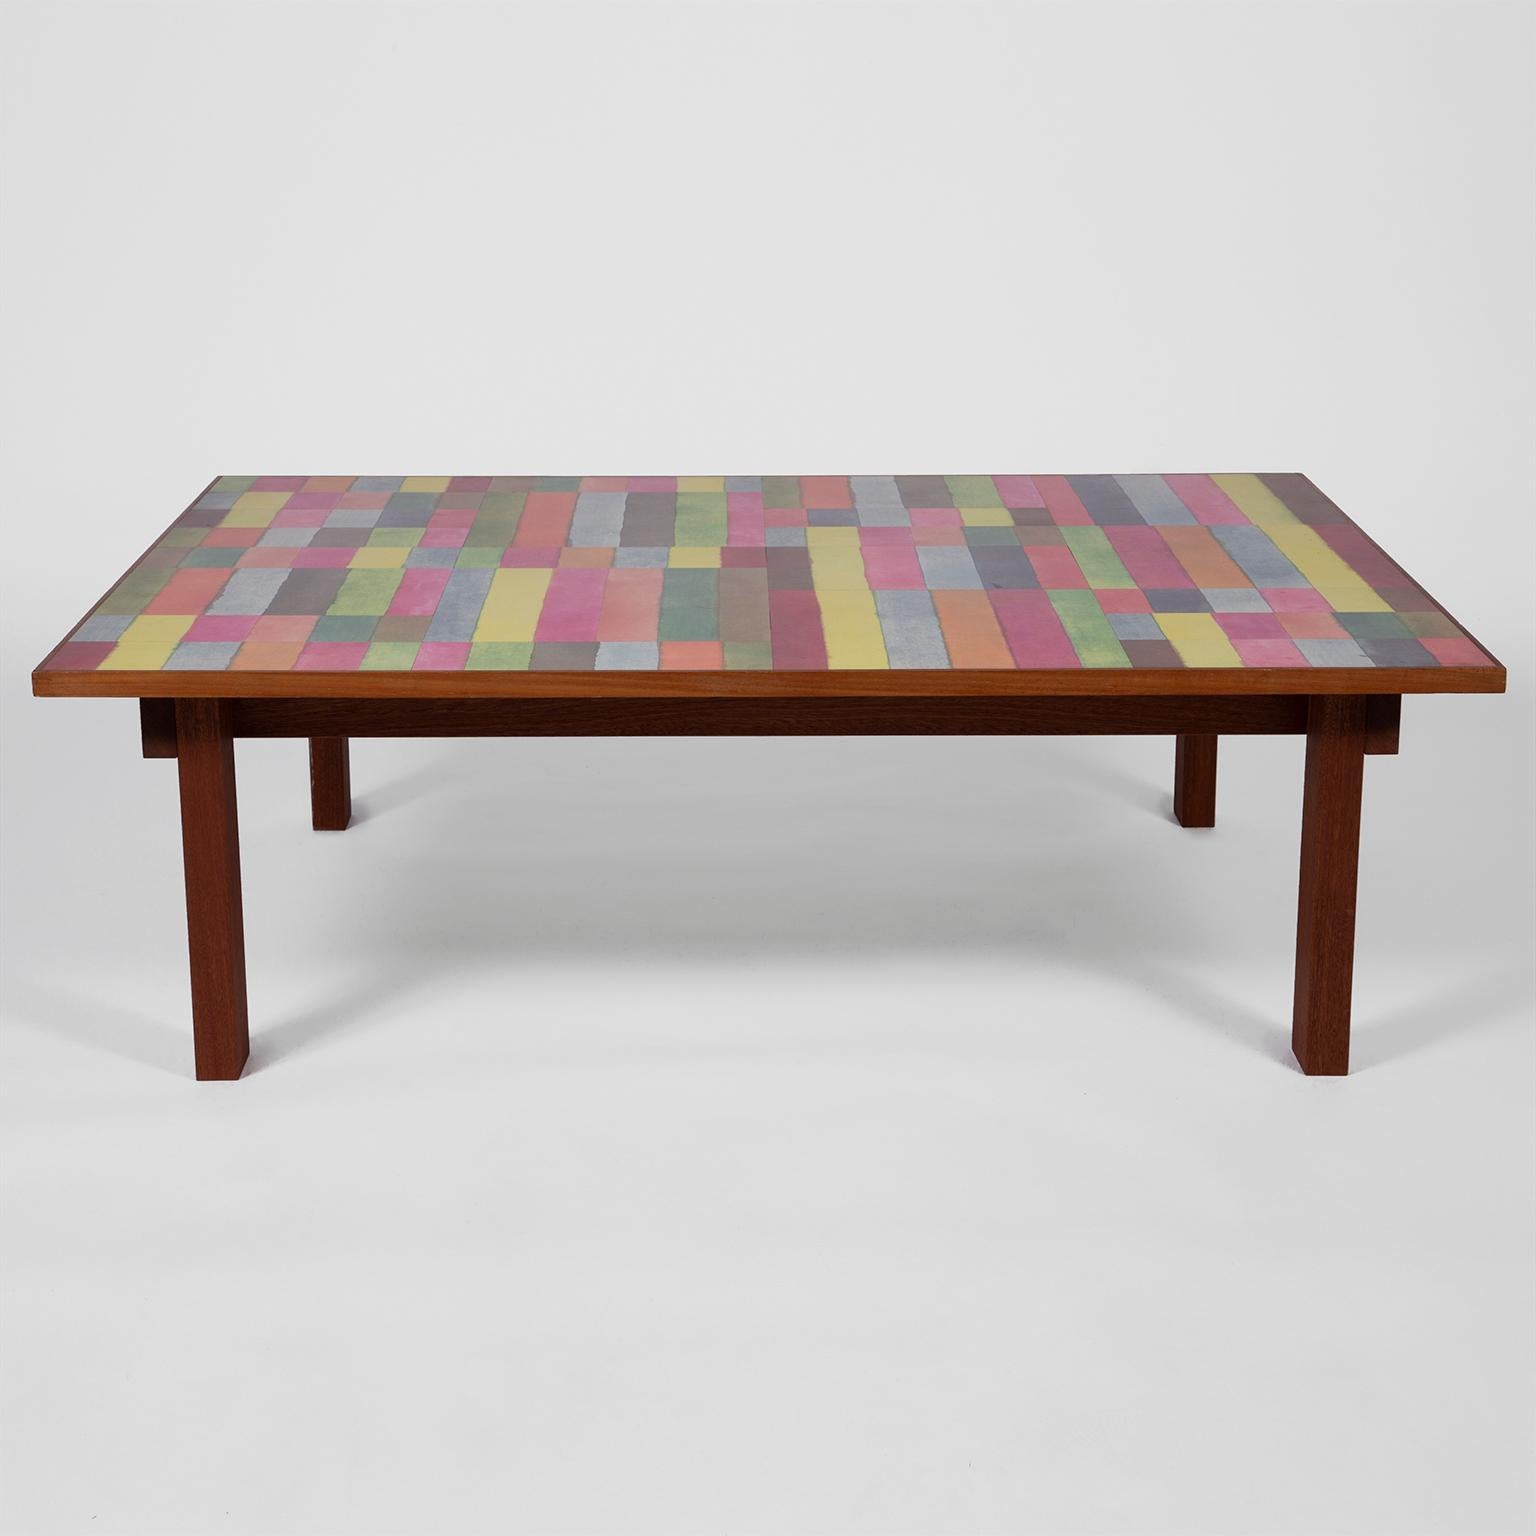 Laminate Multicolour Rectangles Table by DANAD Design 'Barry Daniels' For Sale